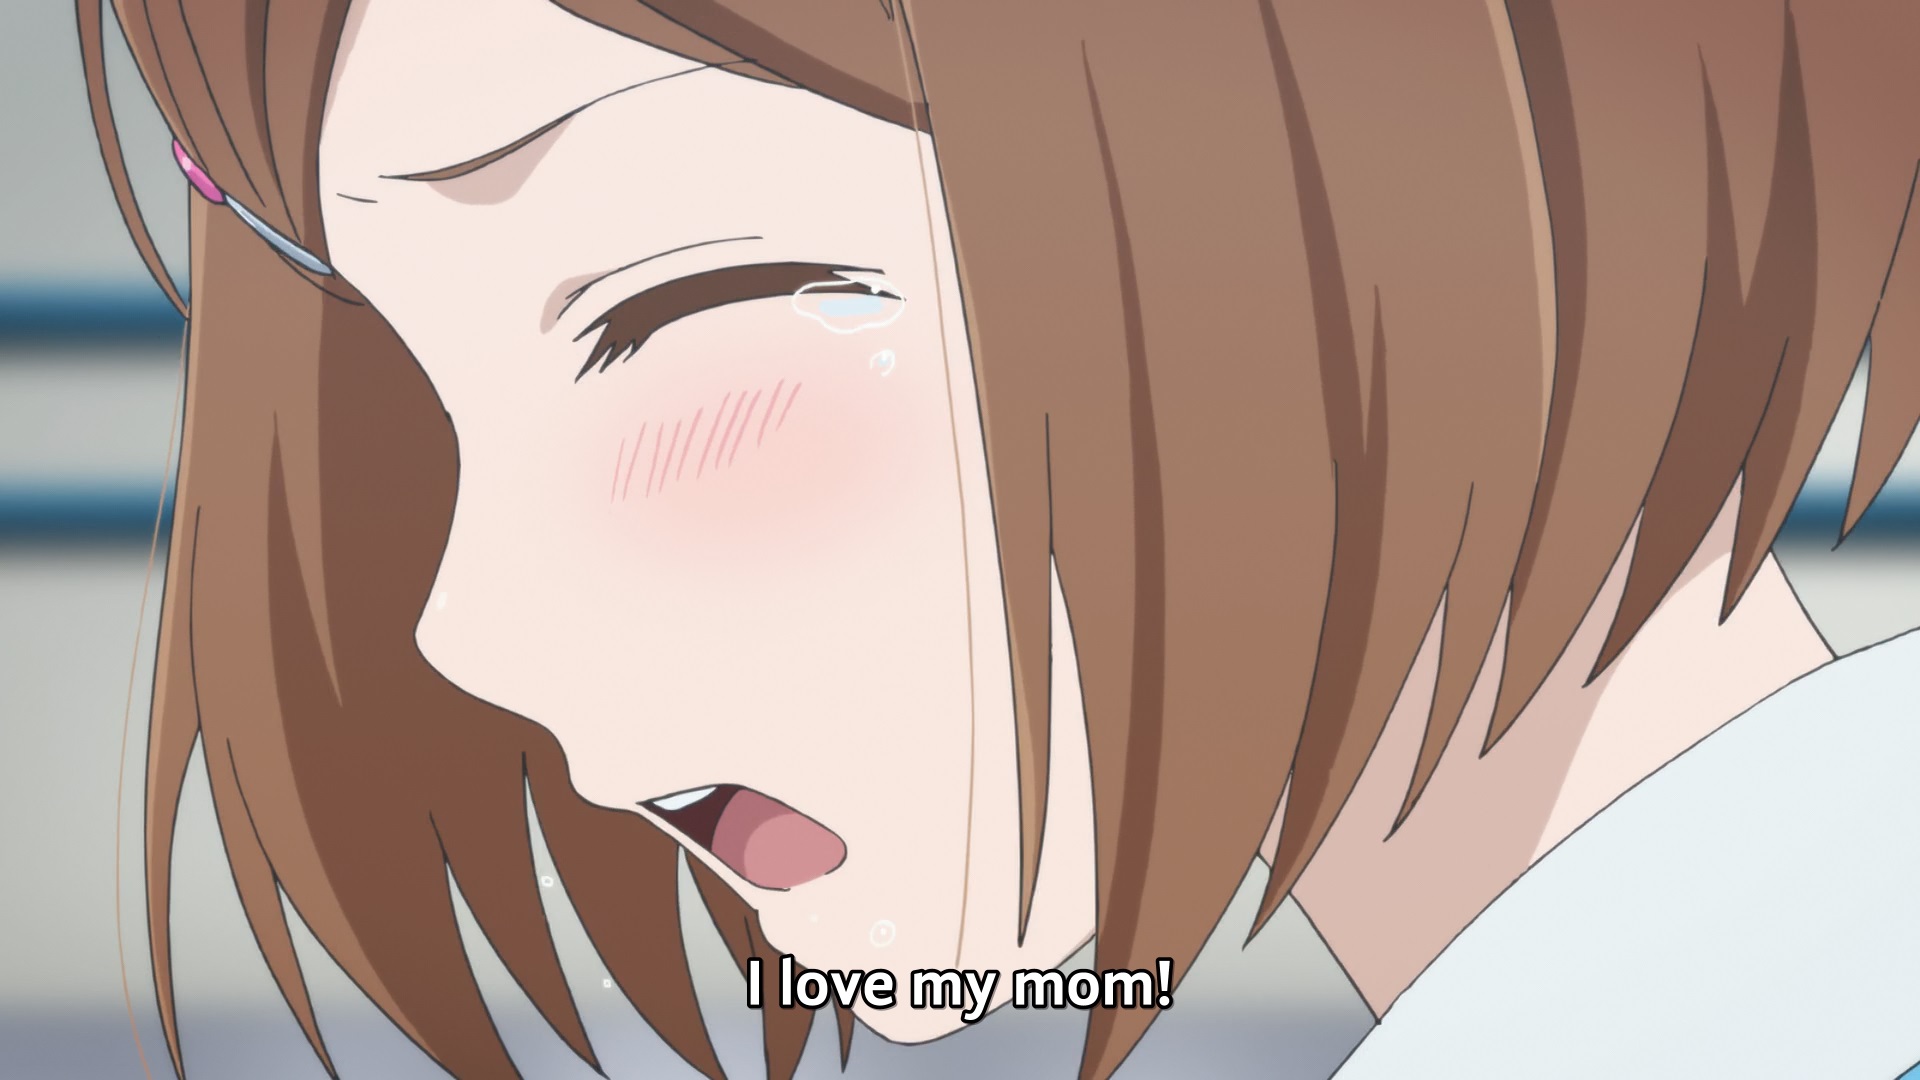 "I love my mom!"